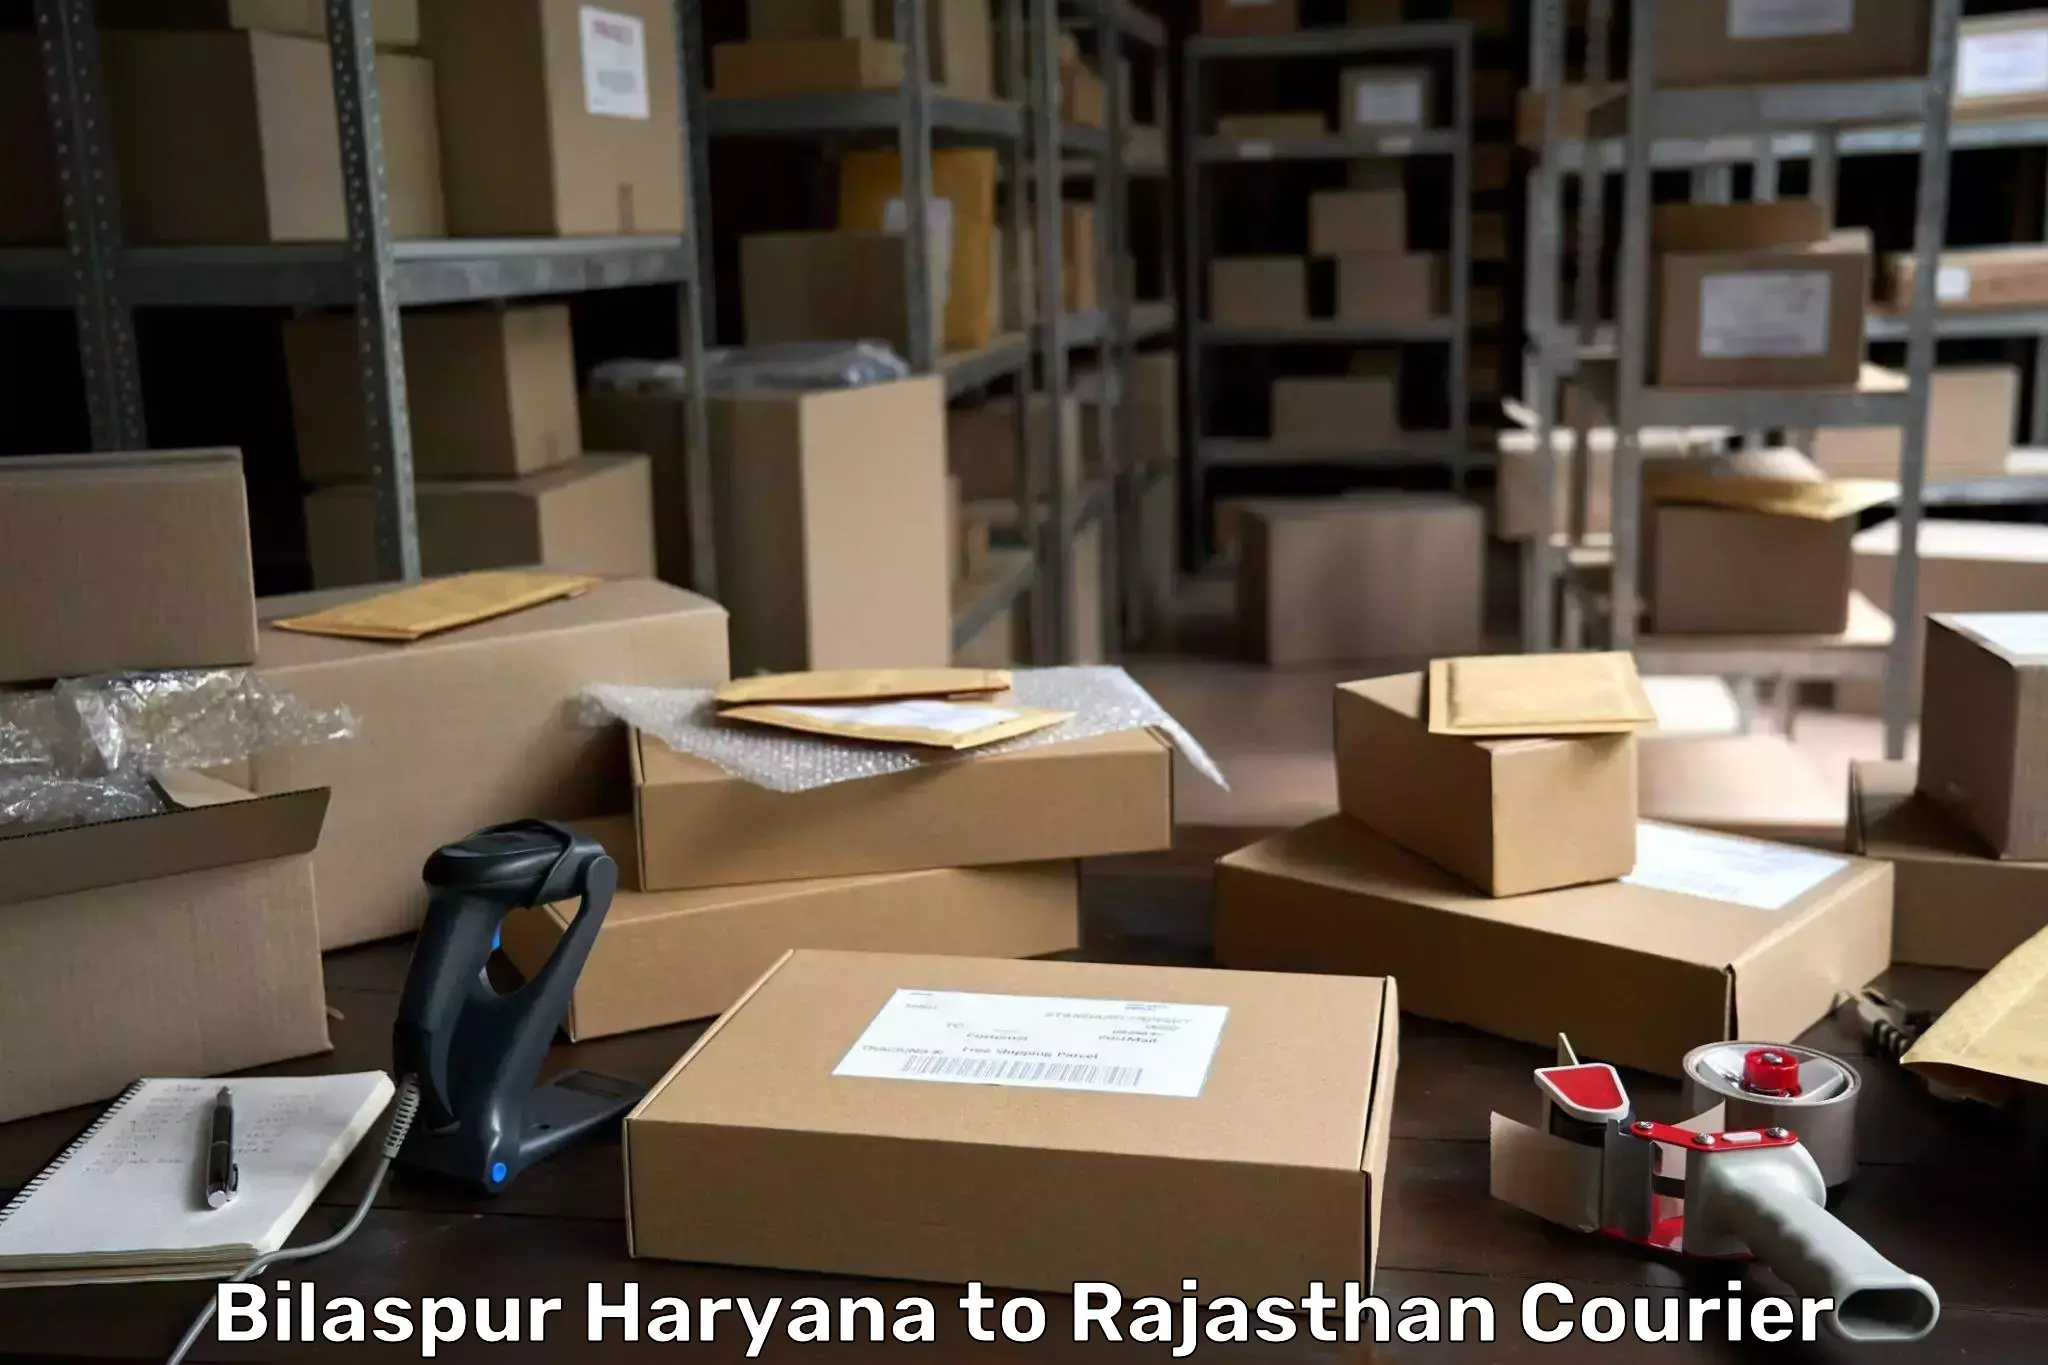 Digital courier platforms Bilaspur Haryana to Banasthali Vidyapith